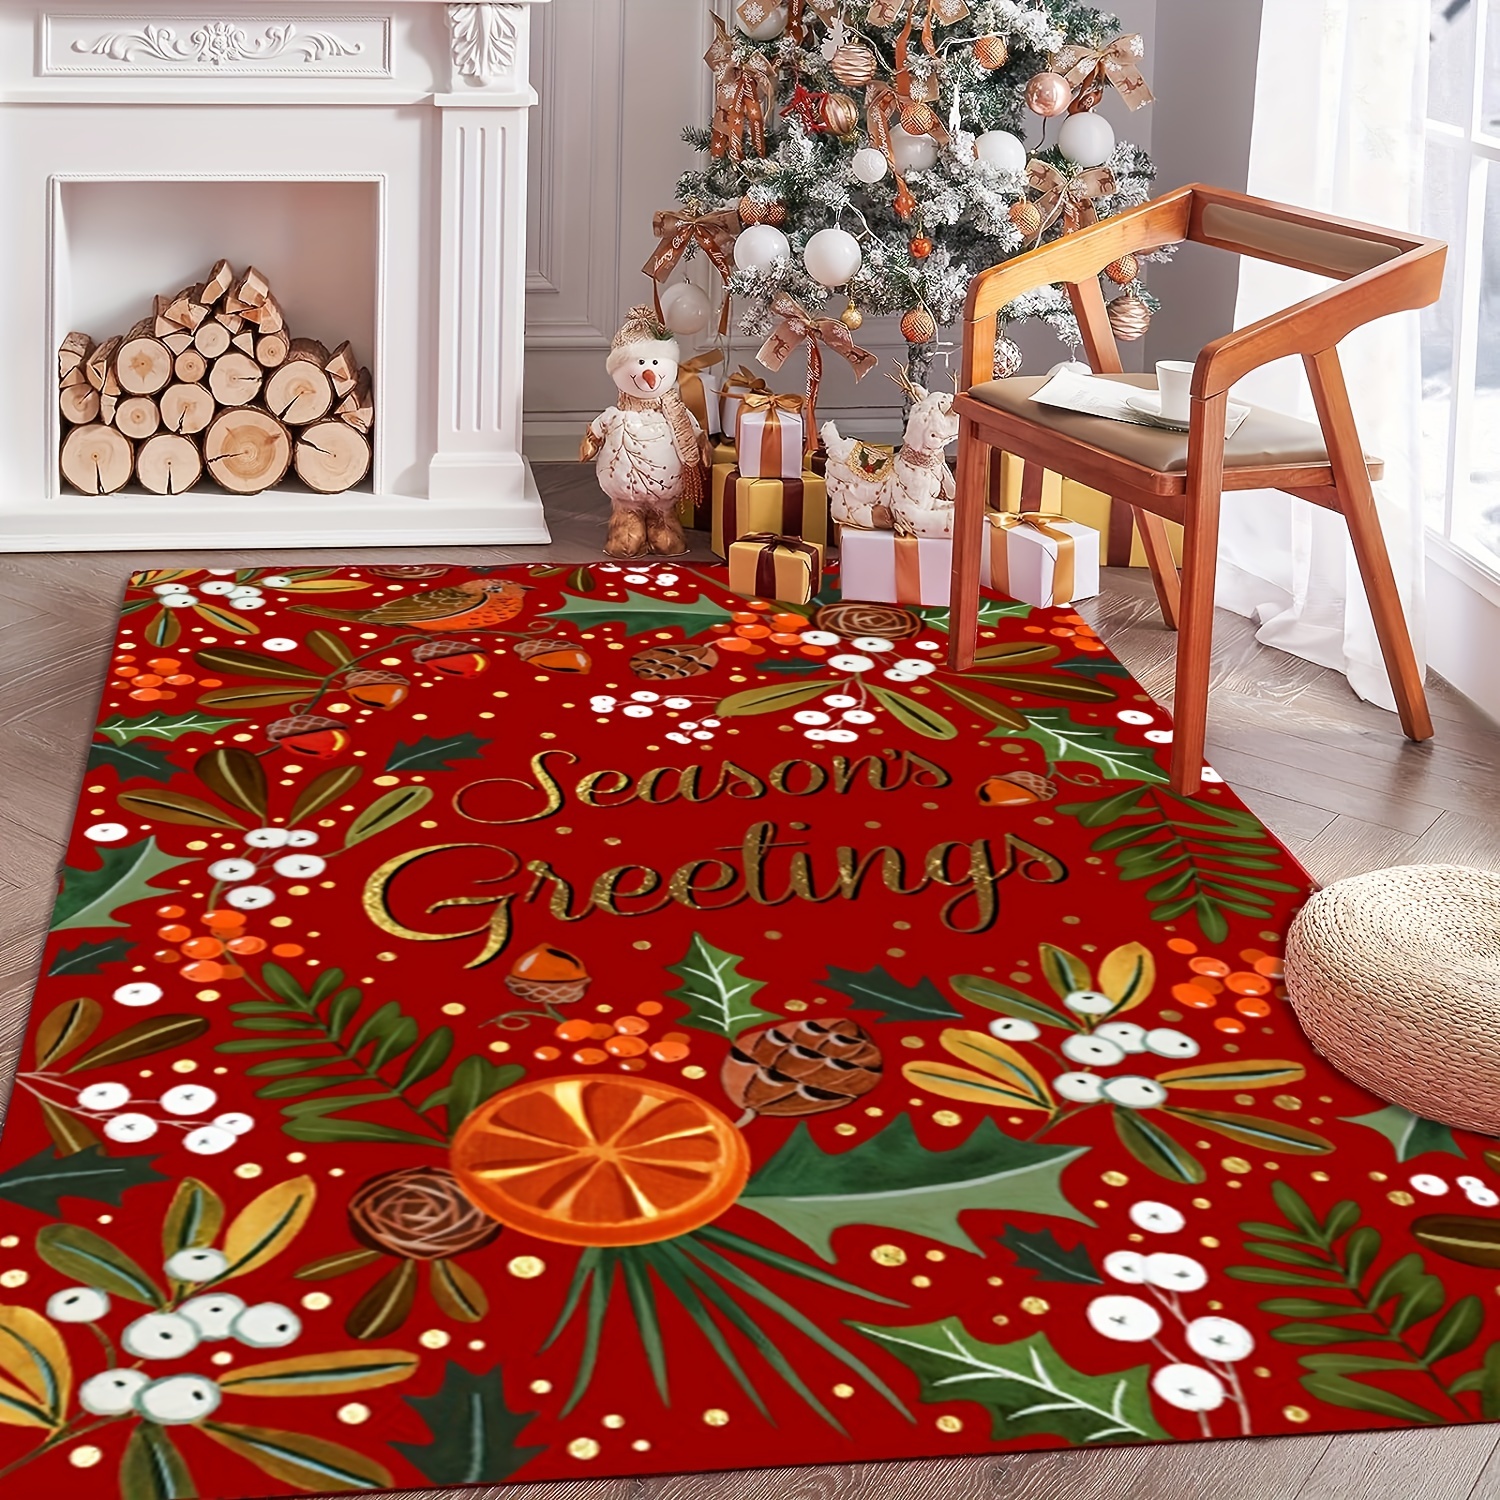 Merry Christmas Tree Decorative Doormat: Water-absorbing & Anti